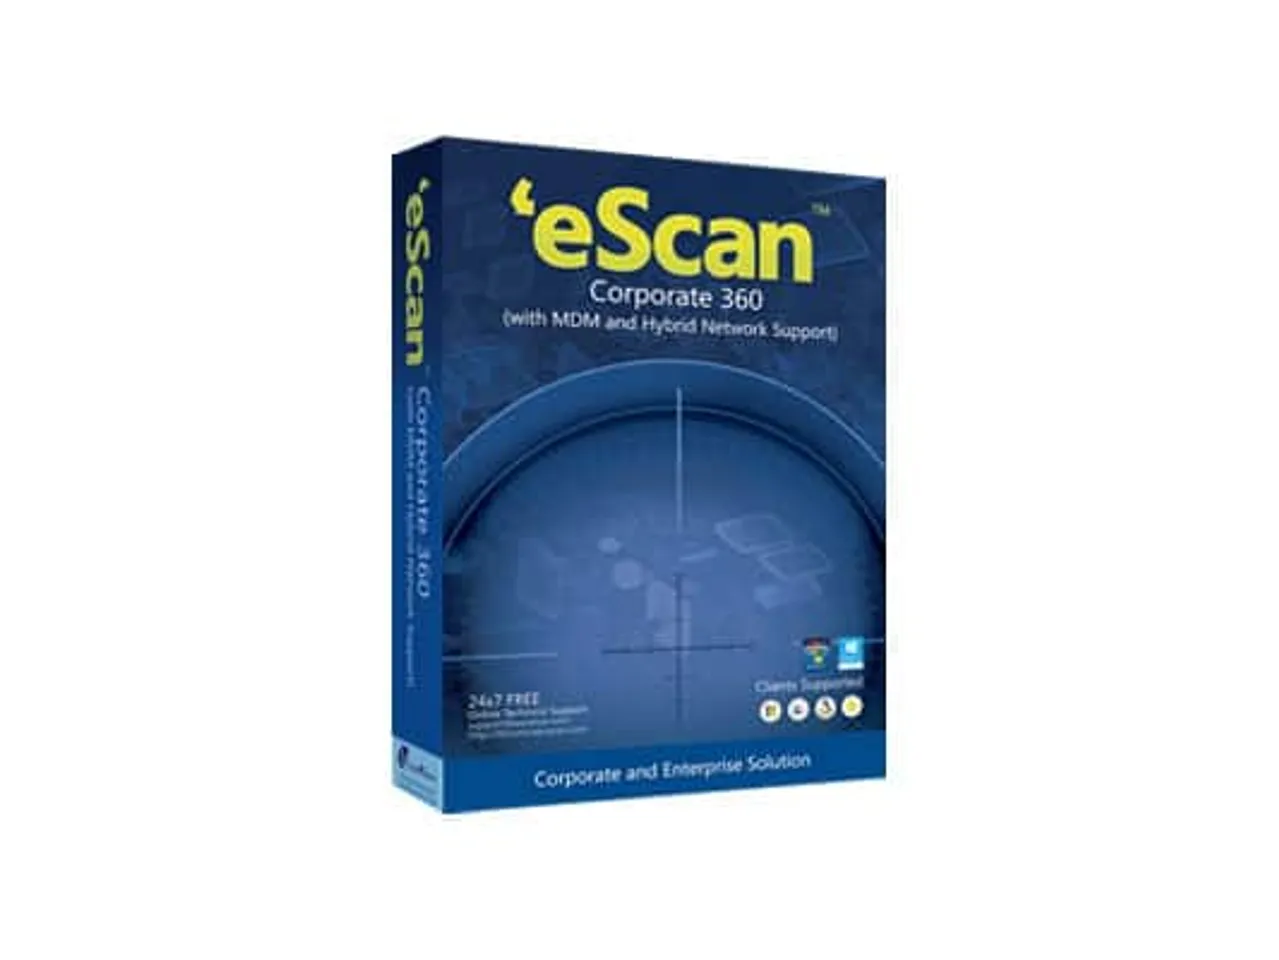 eScan Corporate 360 Antivirus Review